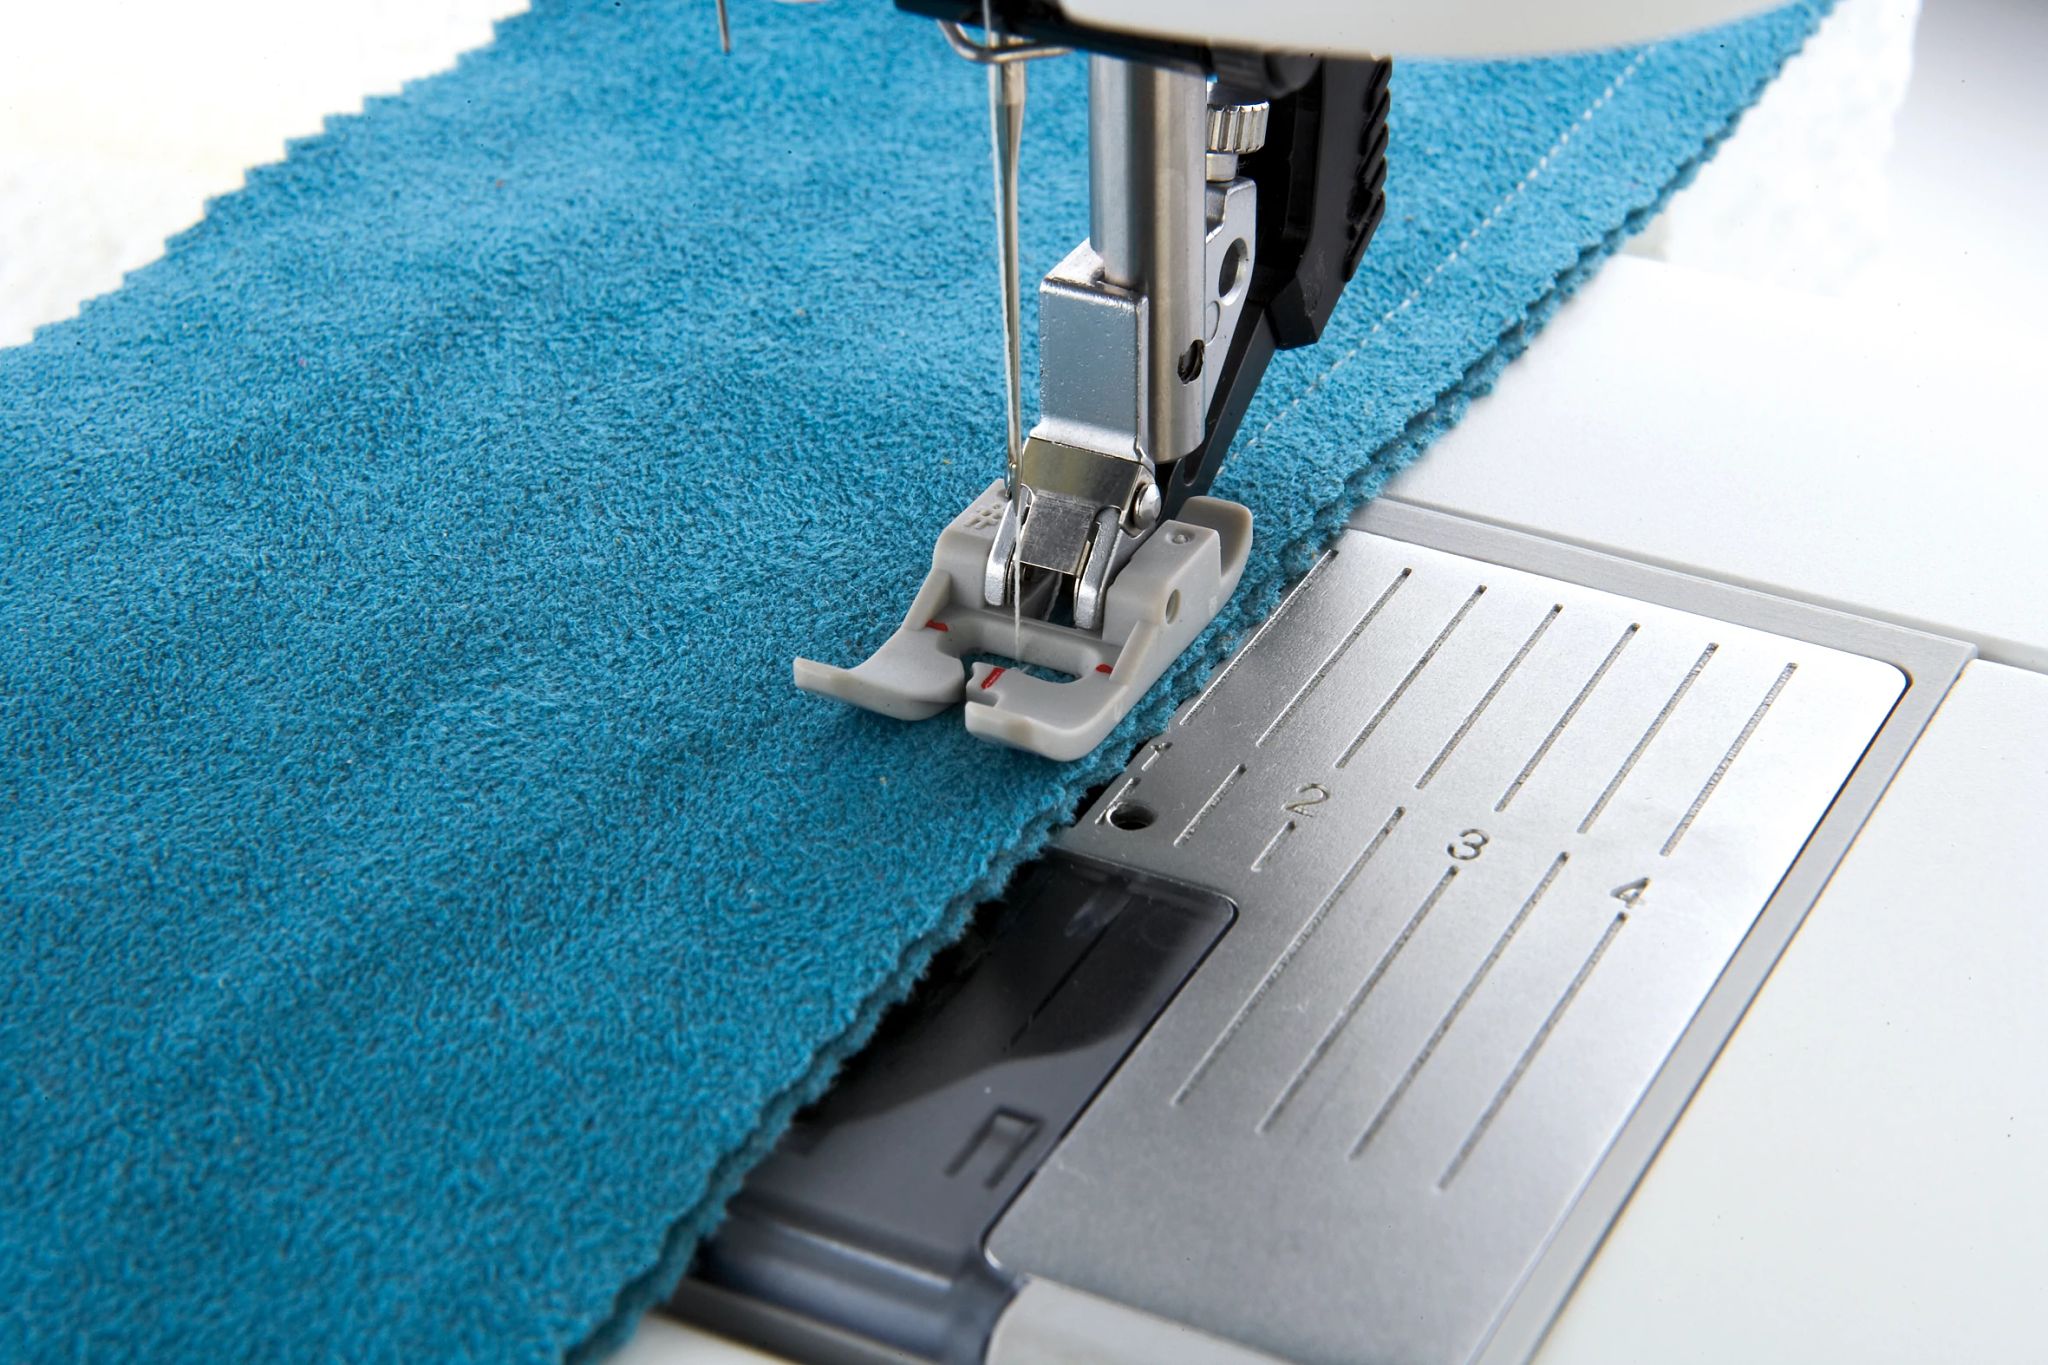 PFAFF expression 710 Sewing Machine for versatility